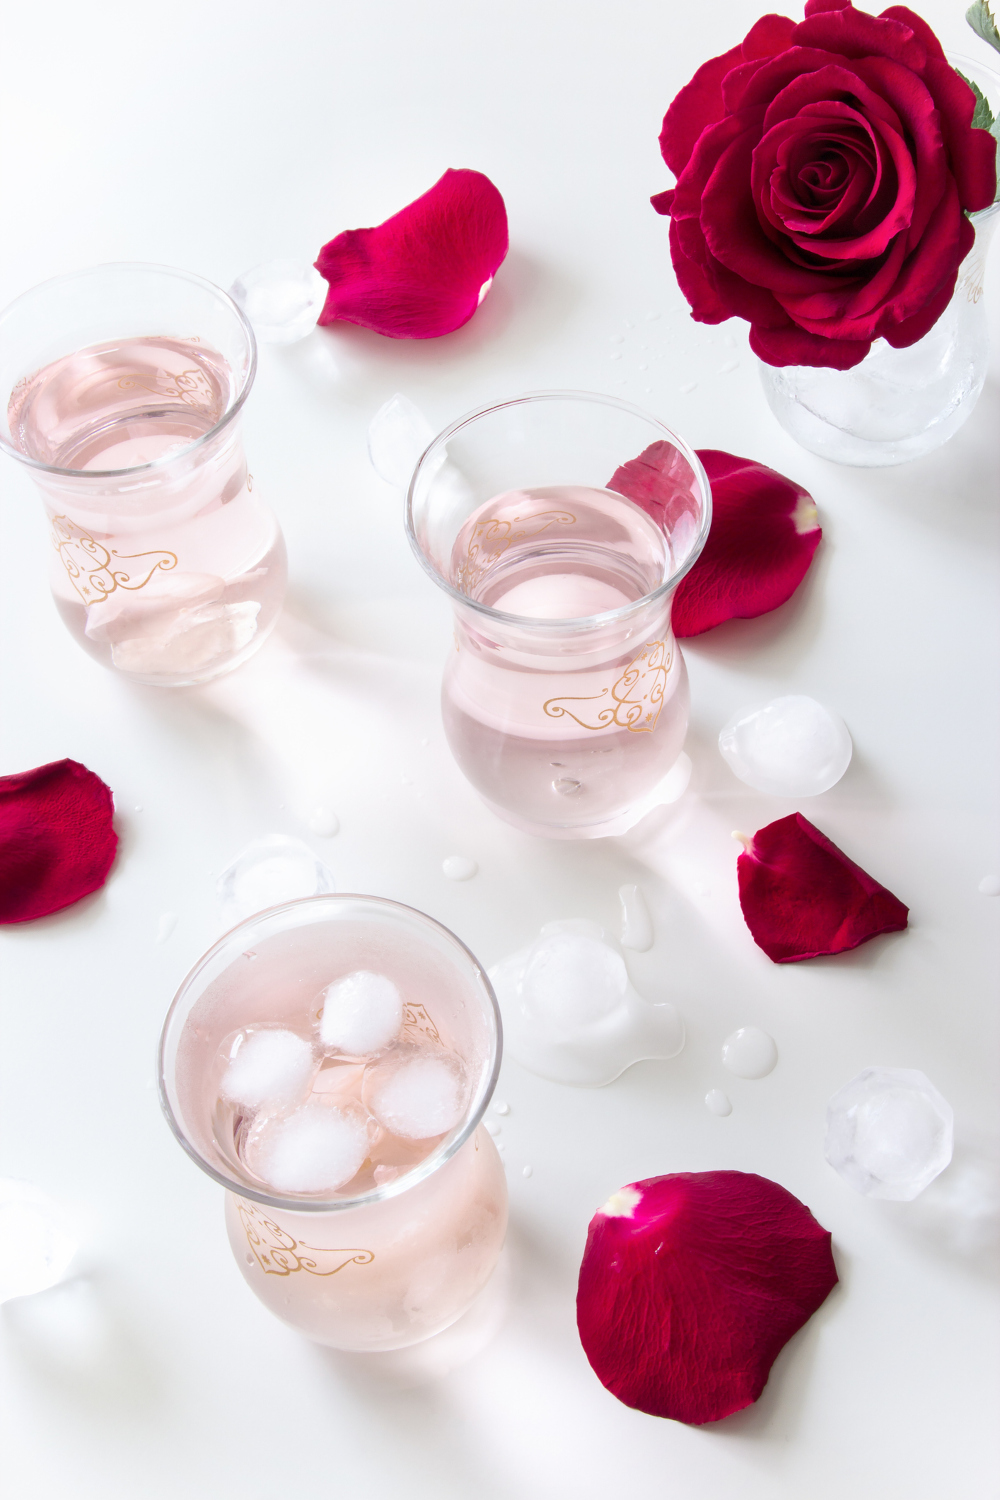 Rose Petal Lemonade - Floral Drink Recipes